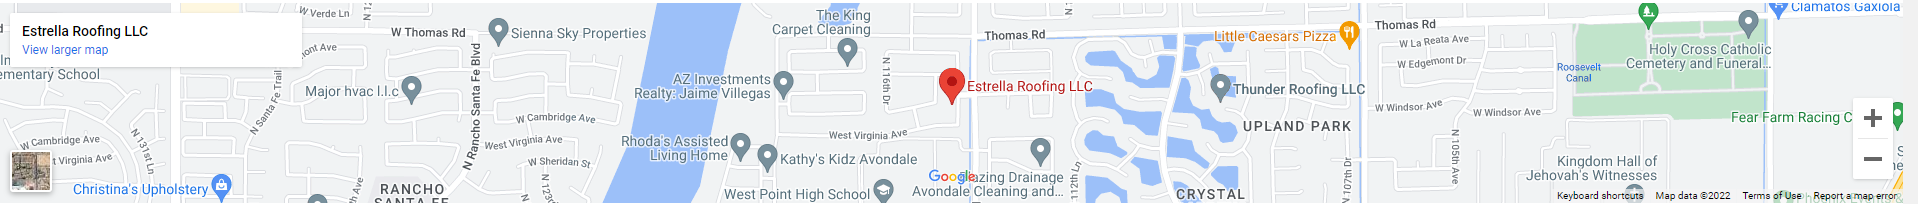 Map image for Estrella Roofing LLC